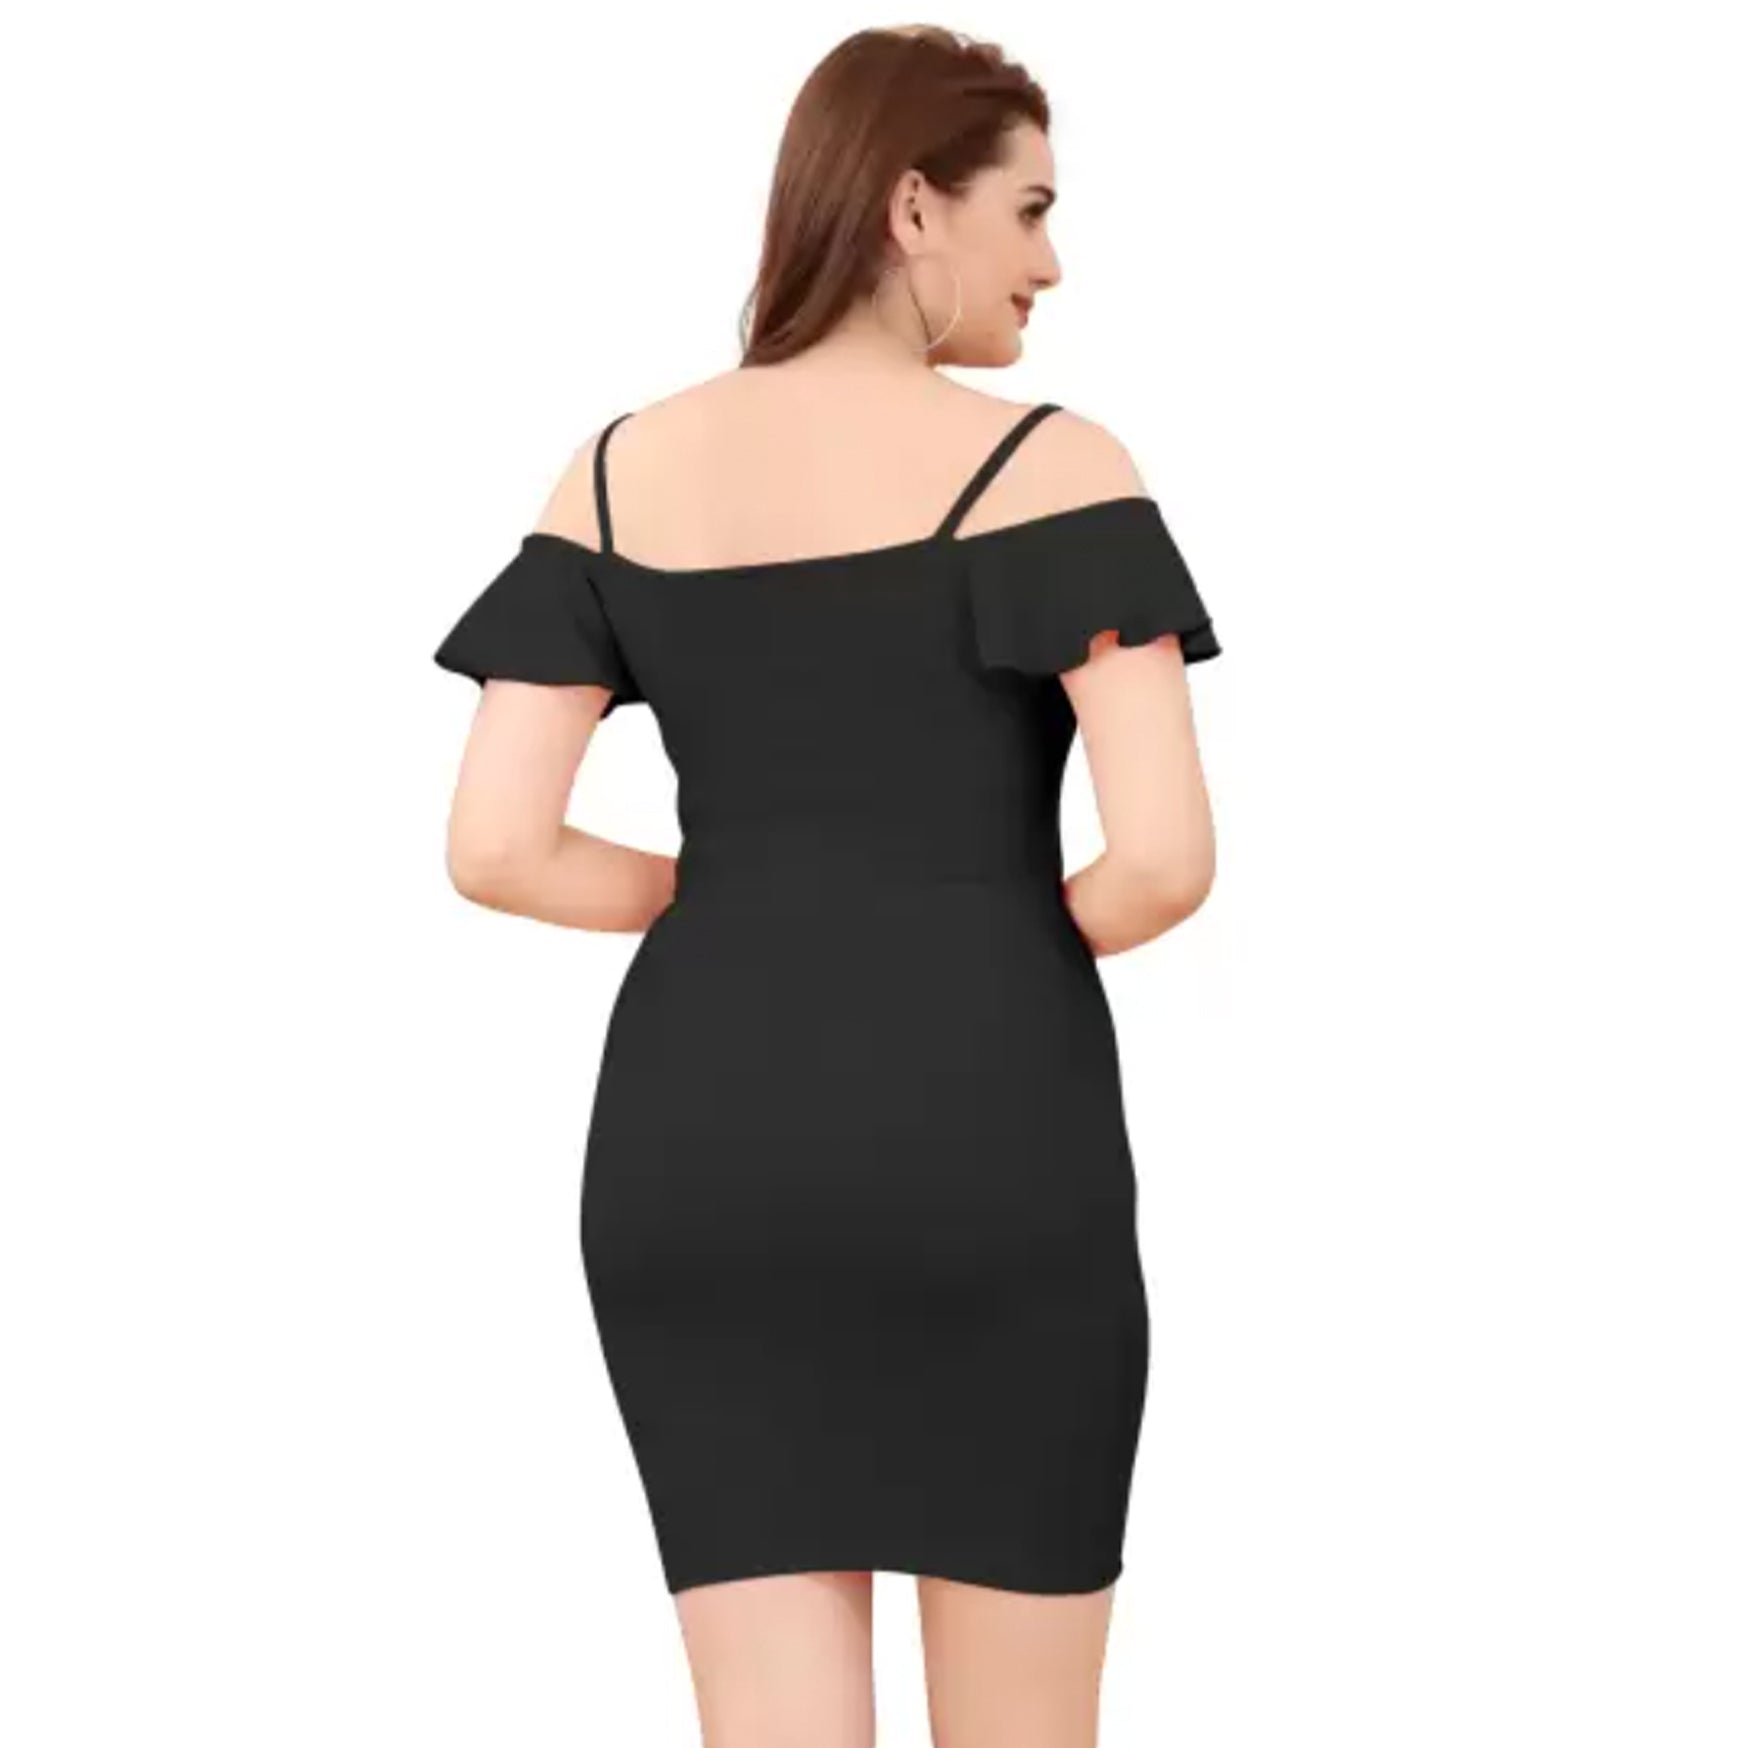 Fedilla Women Bodycon Black Dress